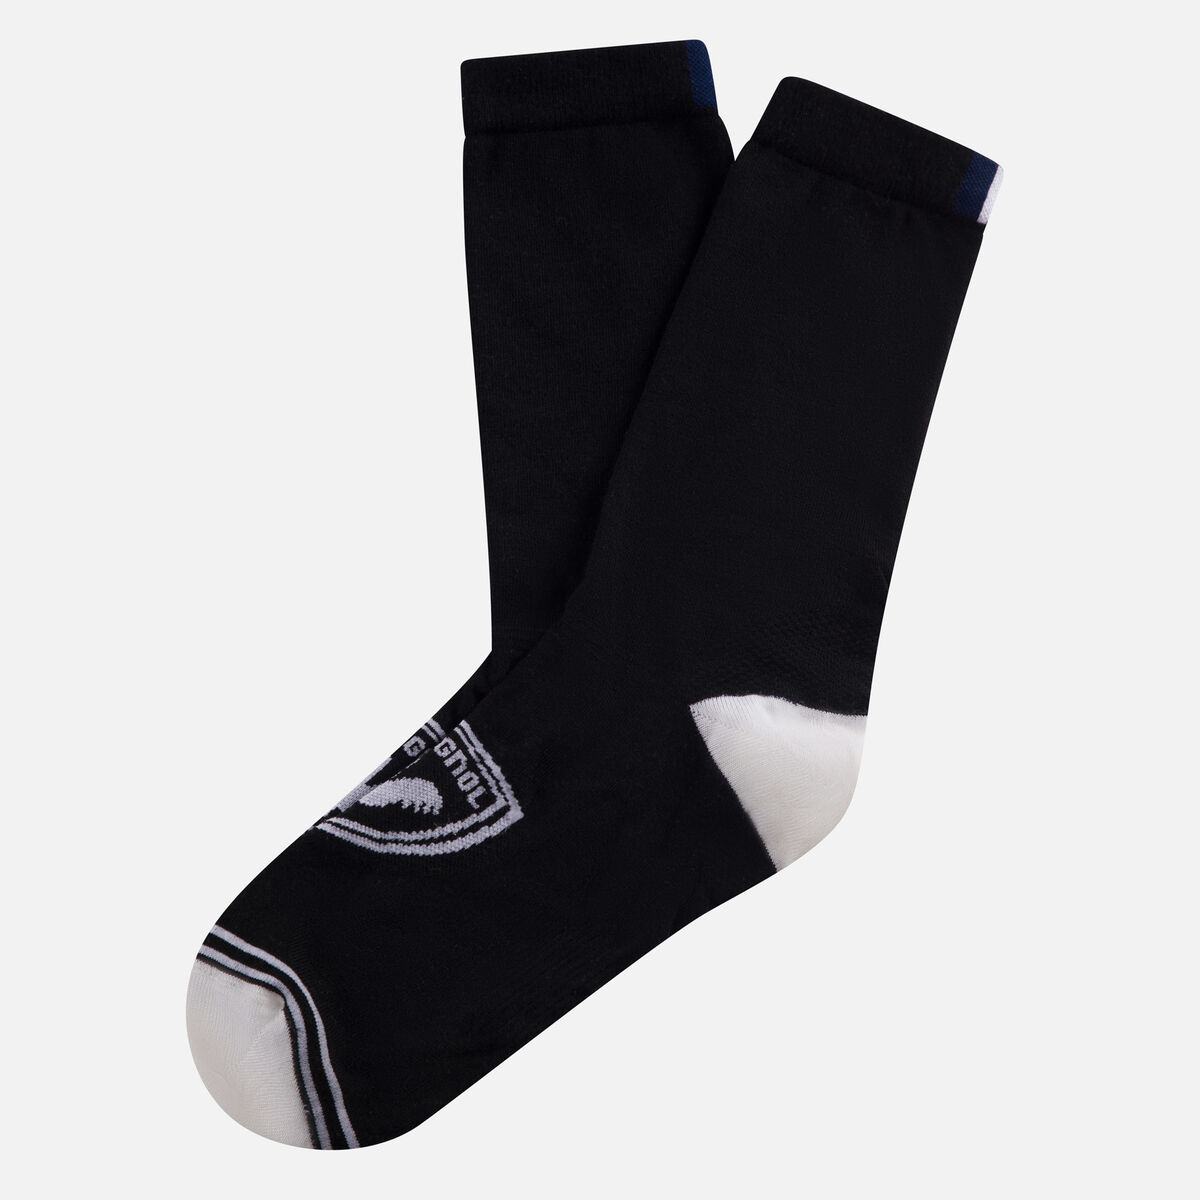 Rossignol Women's lifestyle socks Black